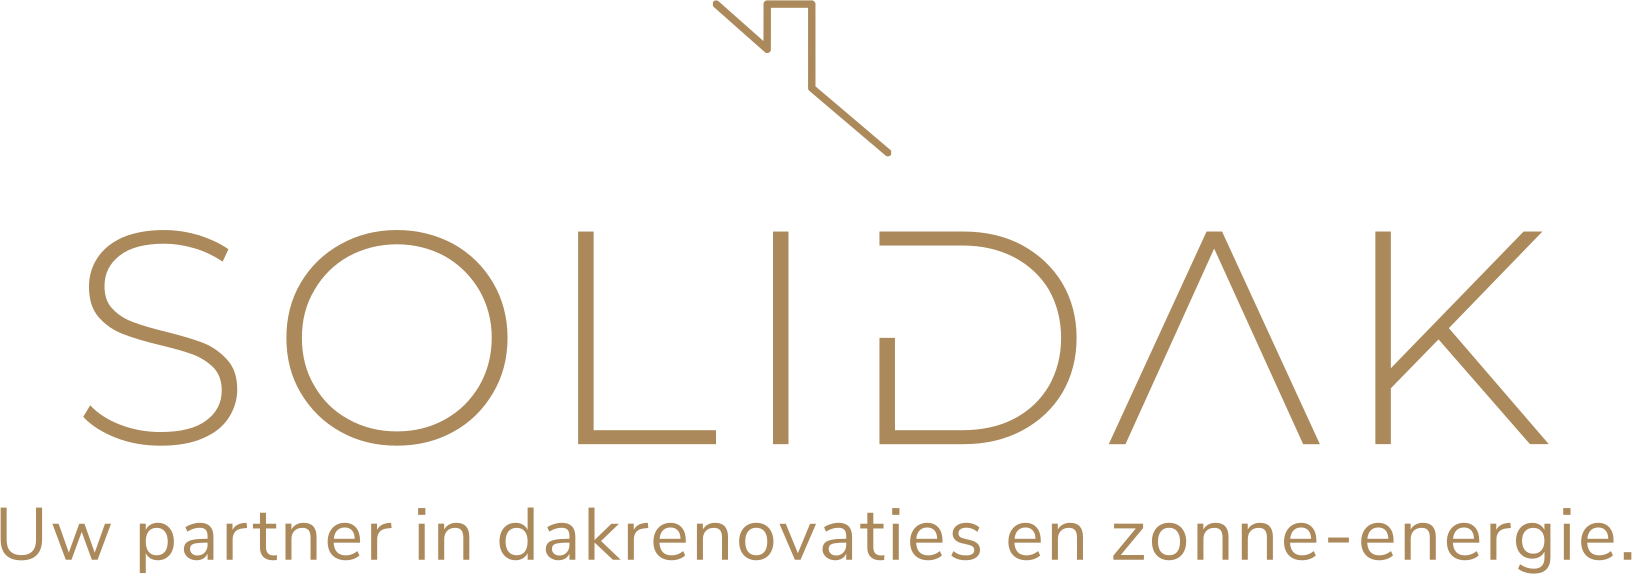 Solidak logo